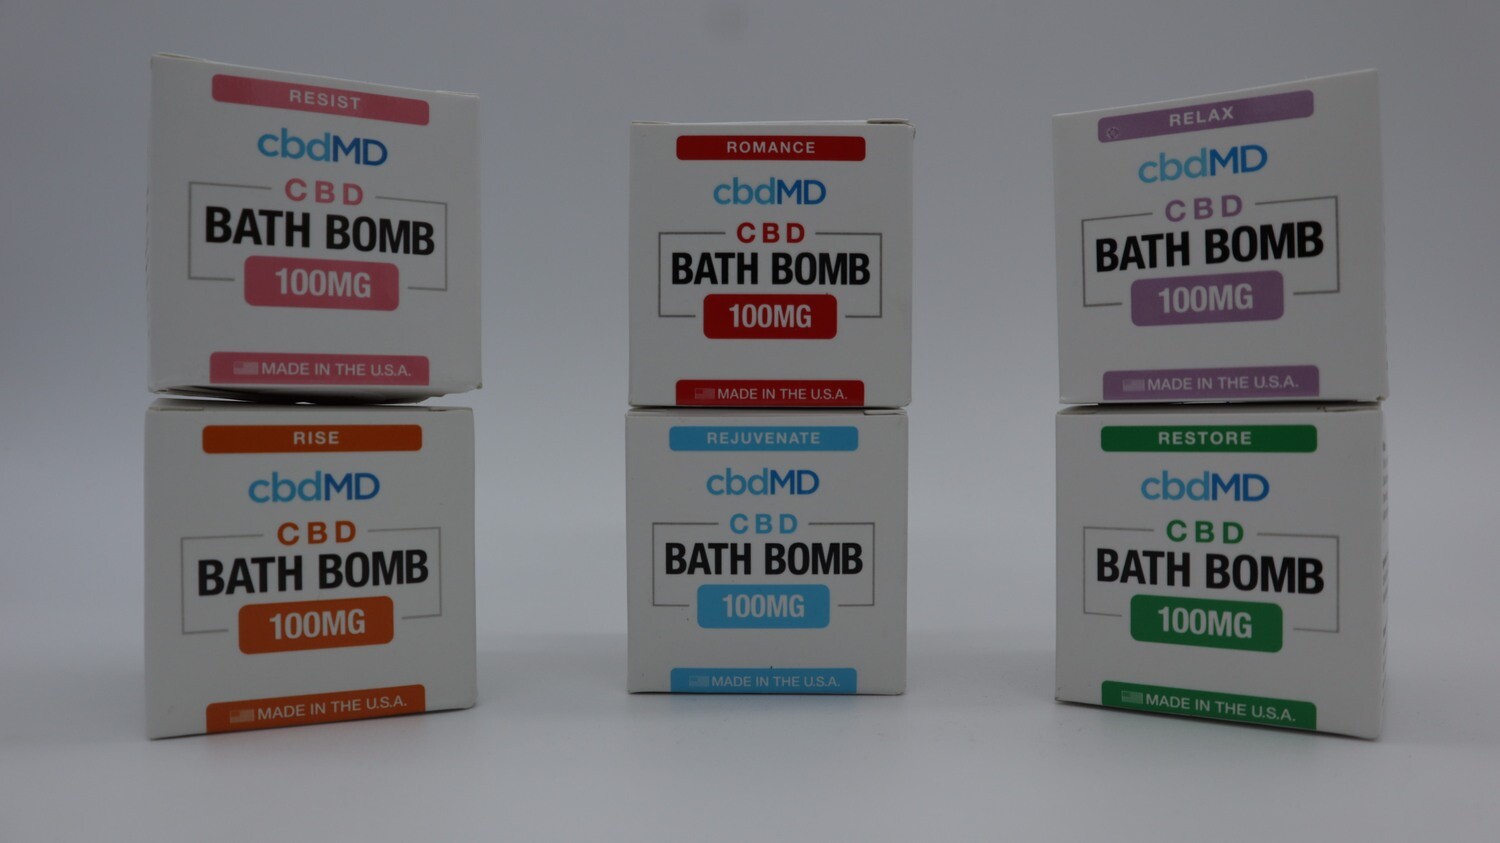 cbdMD 100 mg Rejuvenate Bath Bomb (cloned)